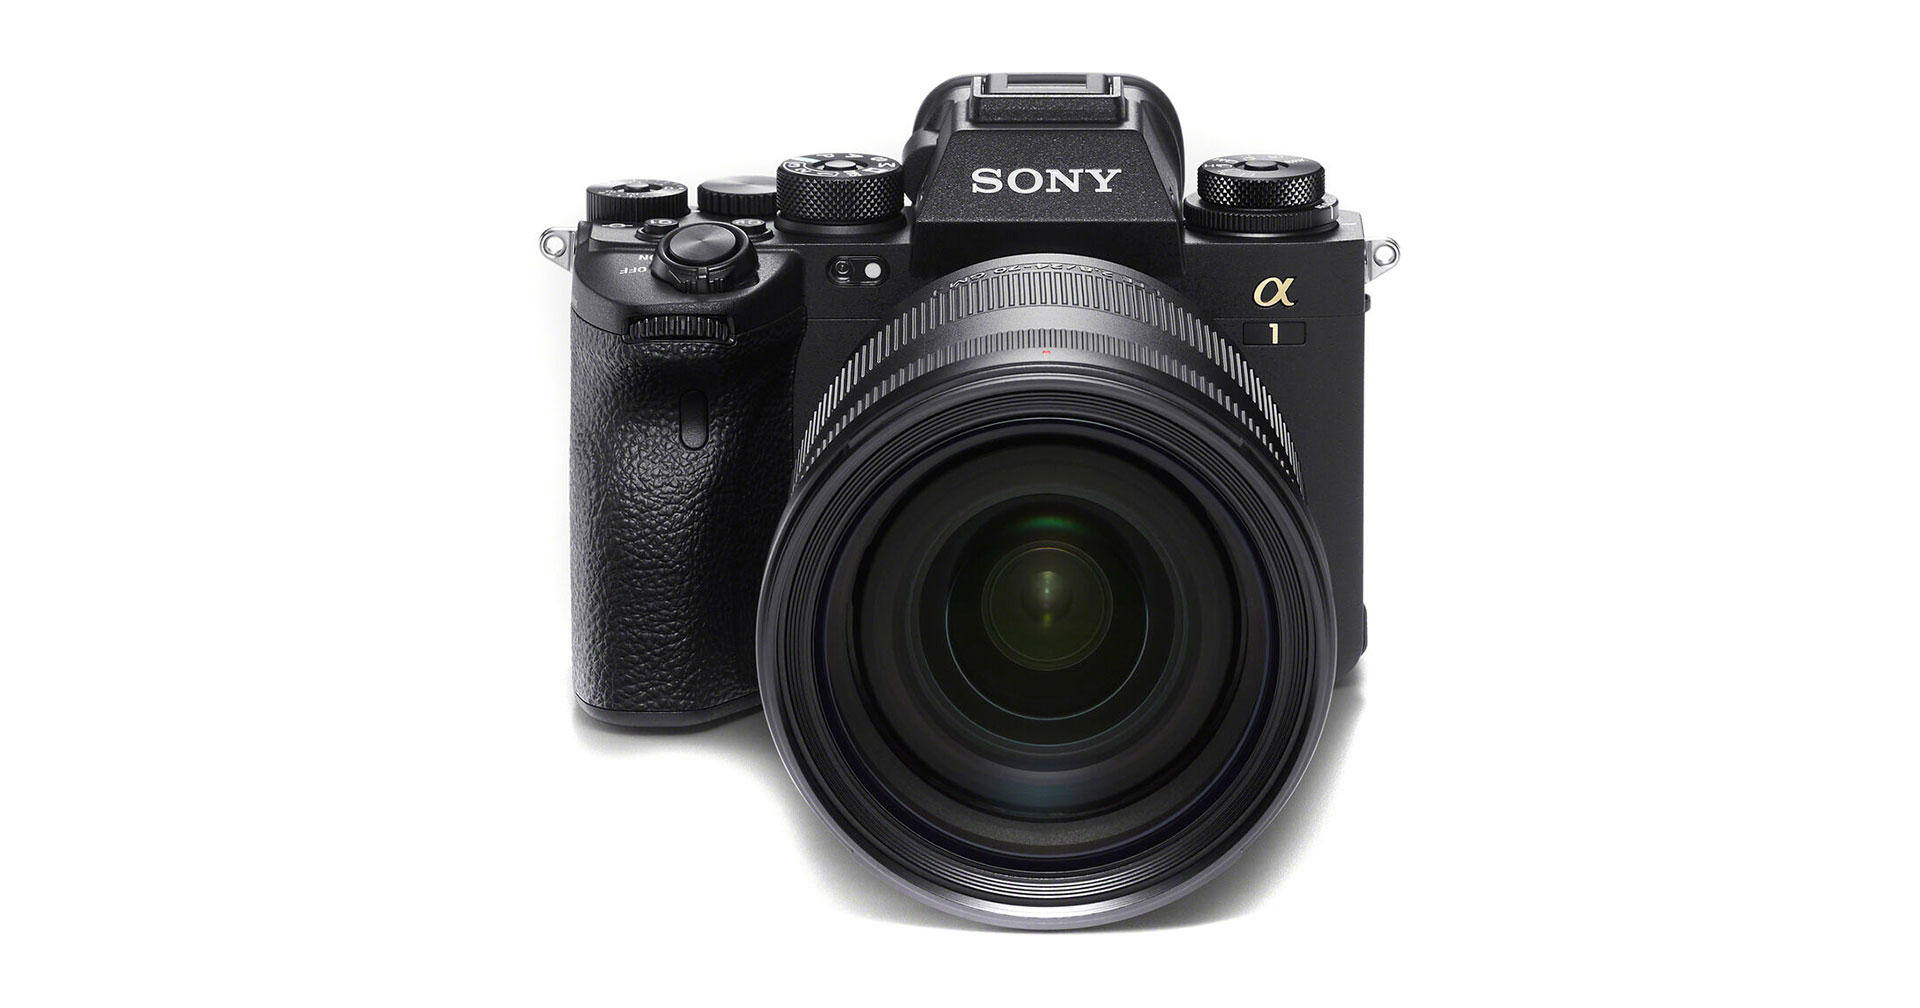 Sony ผลิตกล้องมิเรอร์เลสในปี 2020 ได้กว่า 1.15 ล้านตัว! แซงหน้า Canon และ Nikon